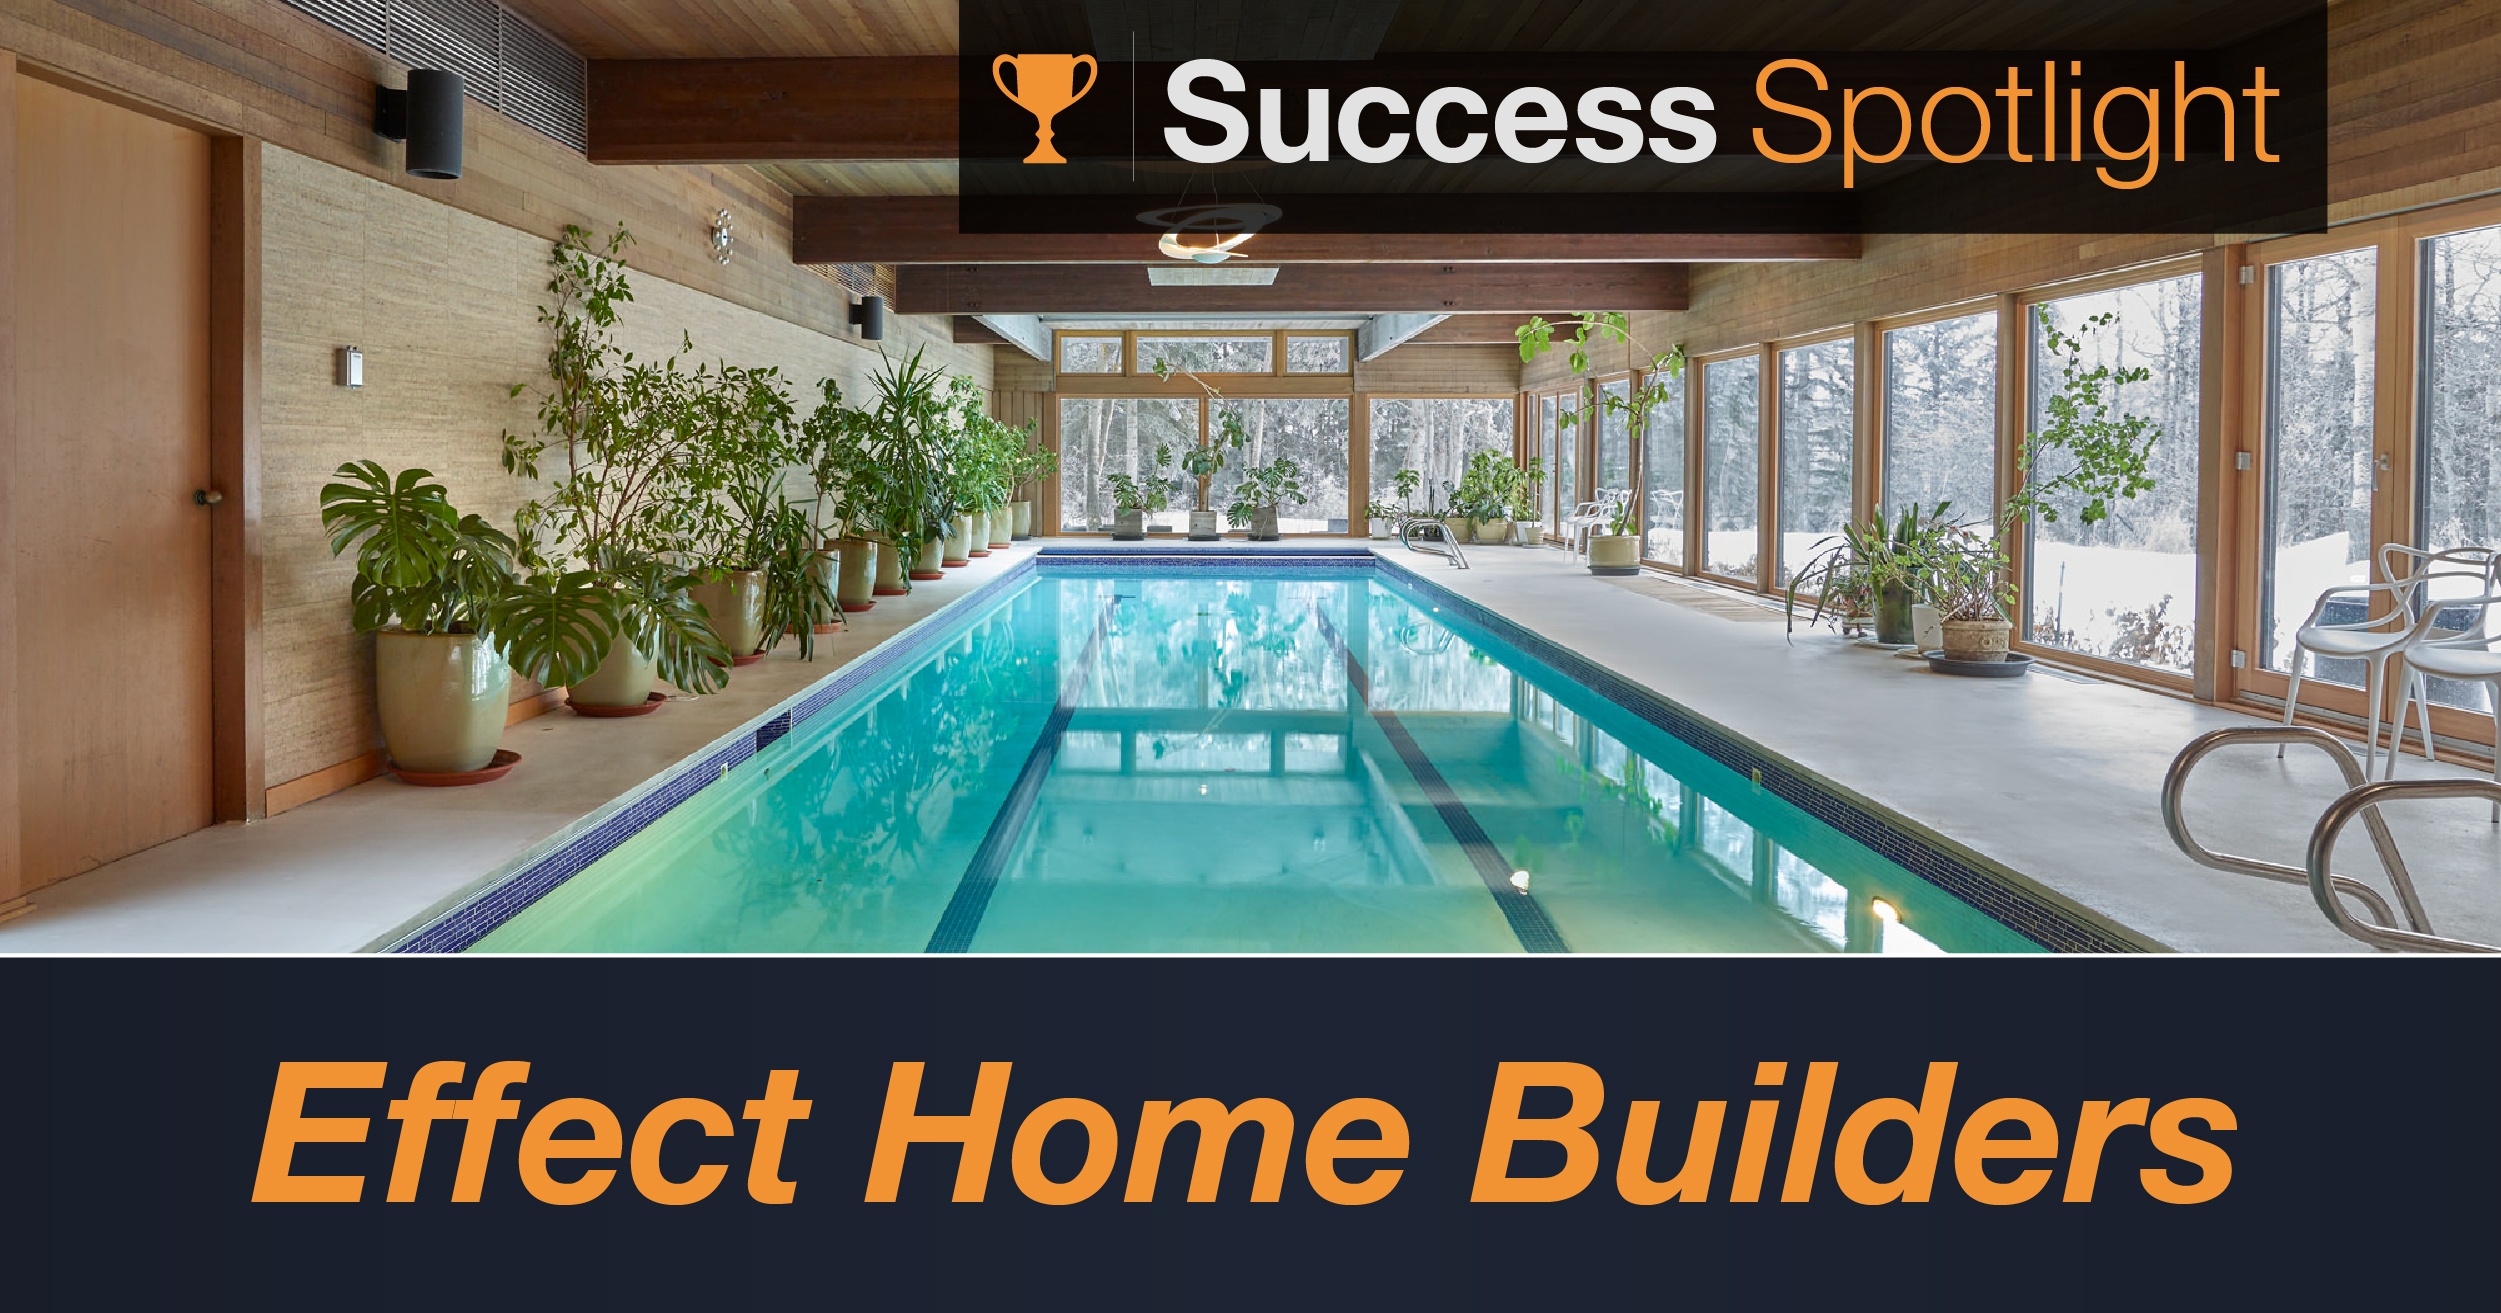 Success Spotlight: Effect Home Builders